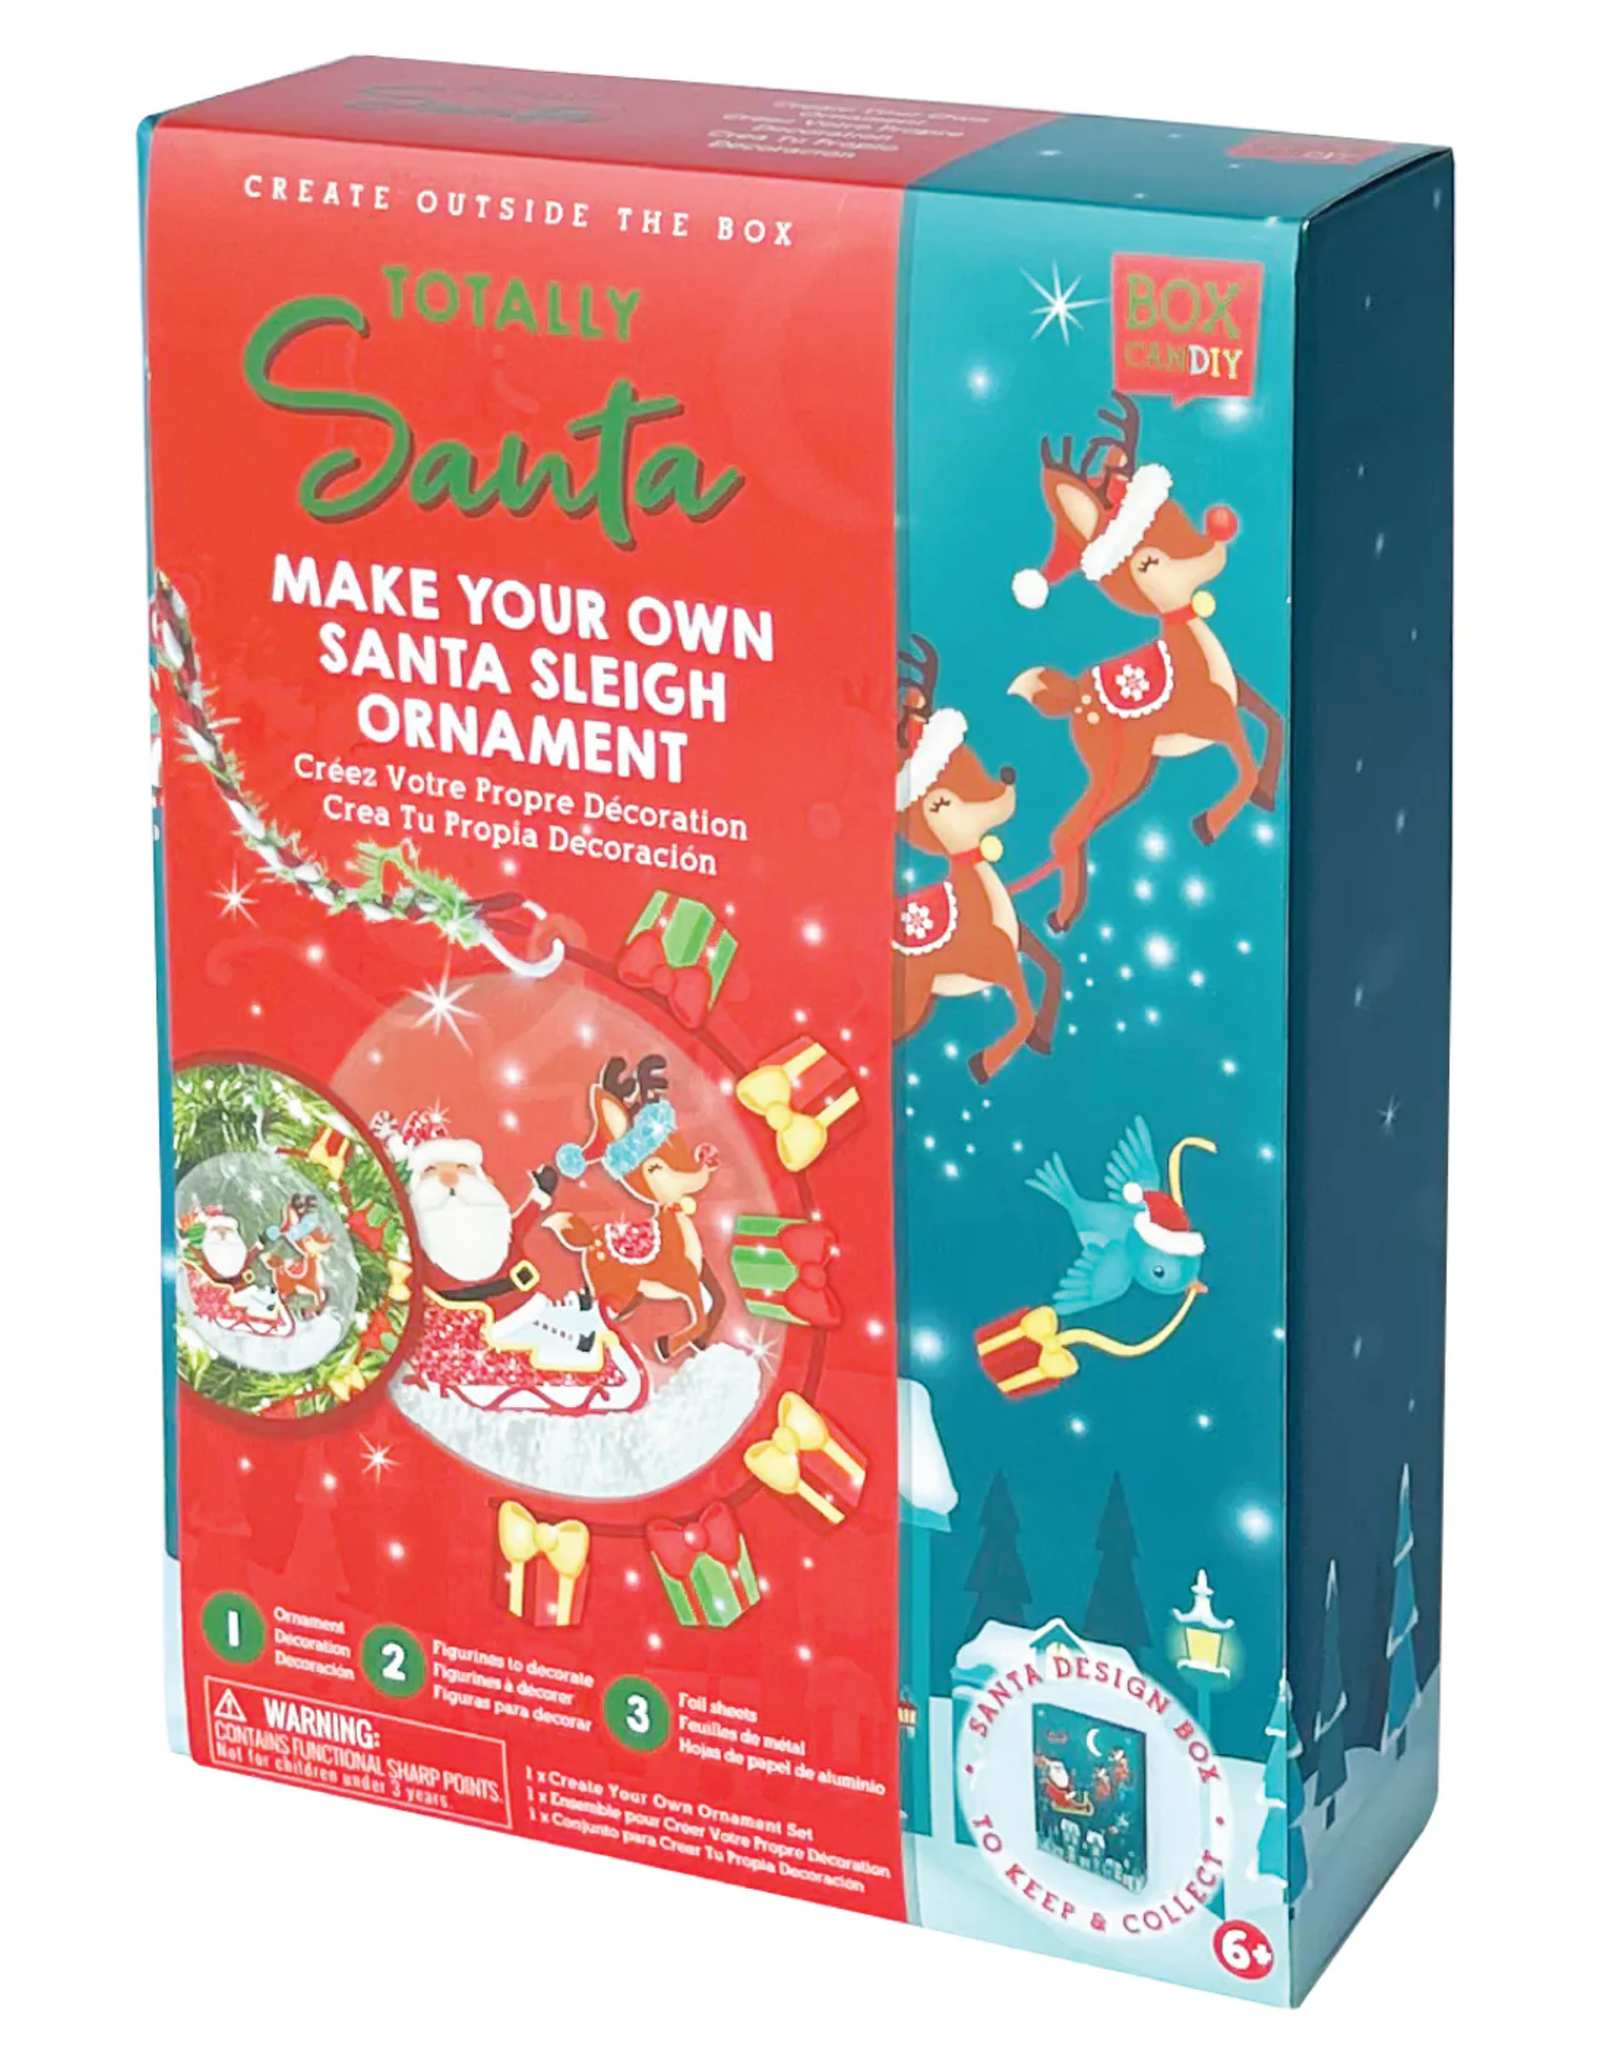 Handstand Kitchen Box CanDIY Totally Santa Make Your Own Santa Sleigh Ornament